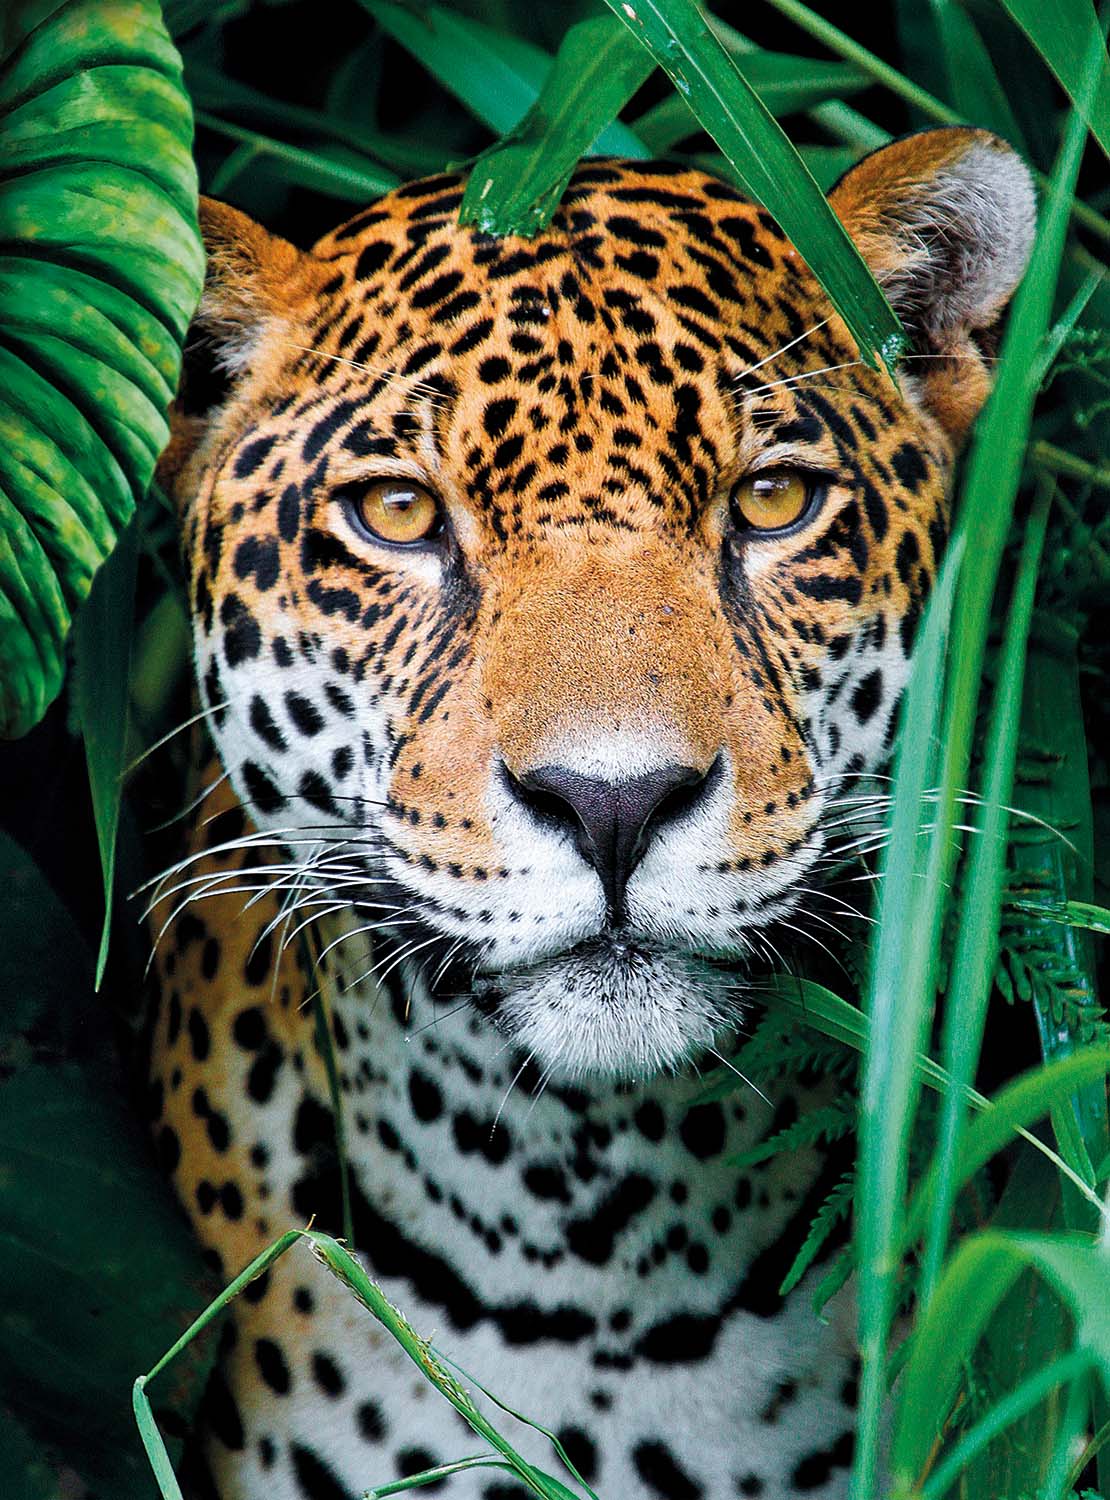 Jaguar in the Jungle